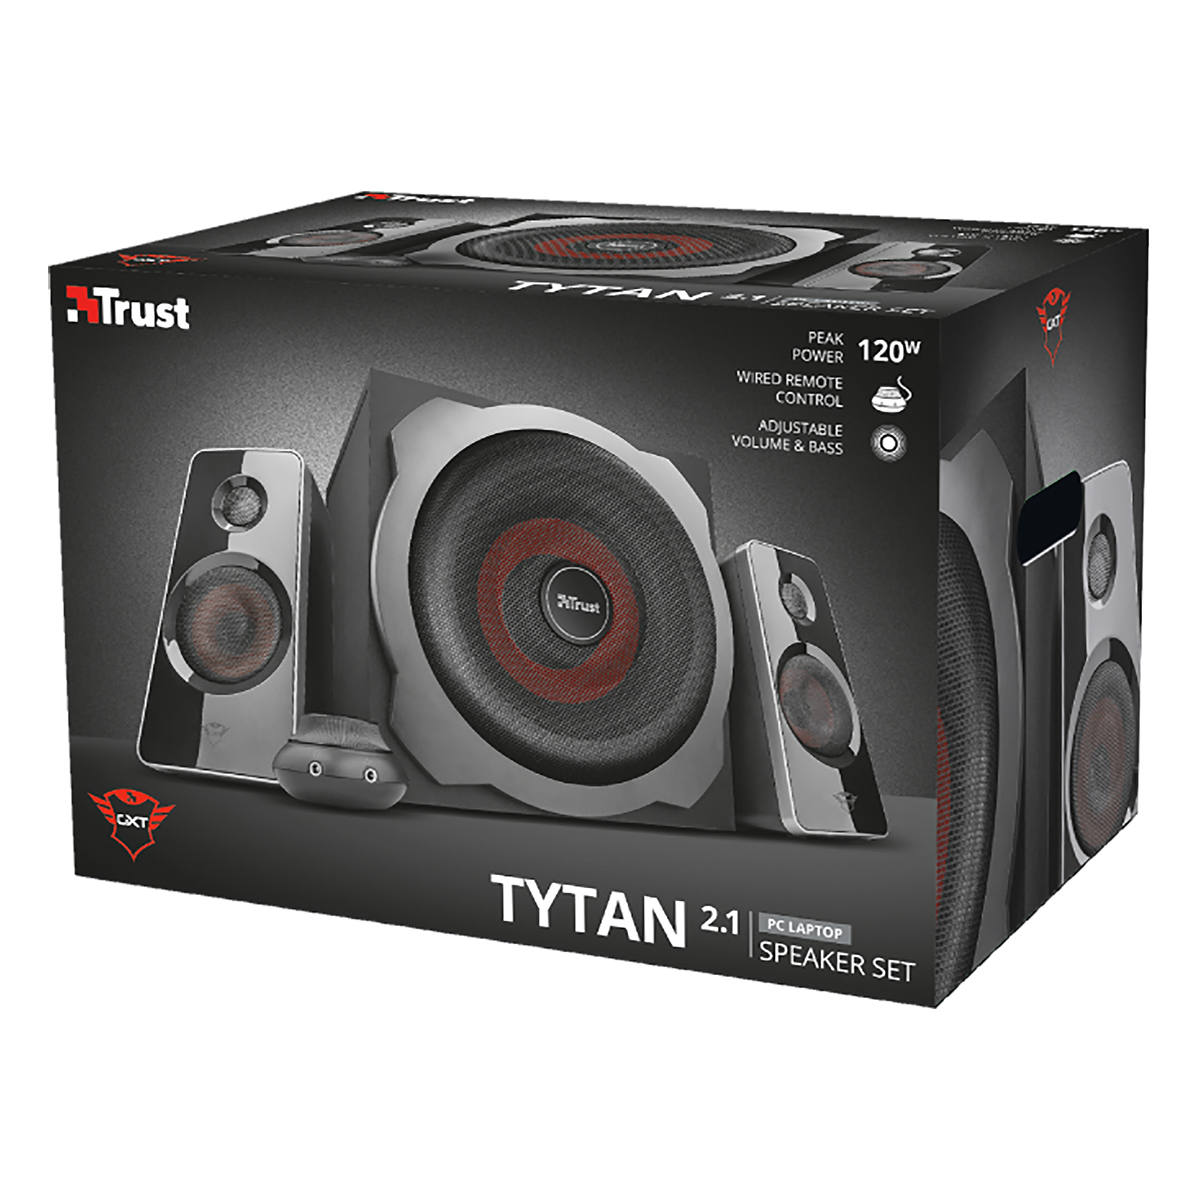 Caixa de Som 2.1 60W RMS Subwoofer Ultimate Bass Speaker Set Trust GXT 38 Tytan